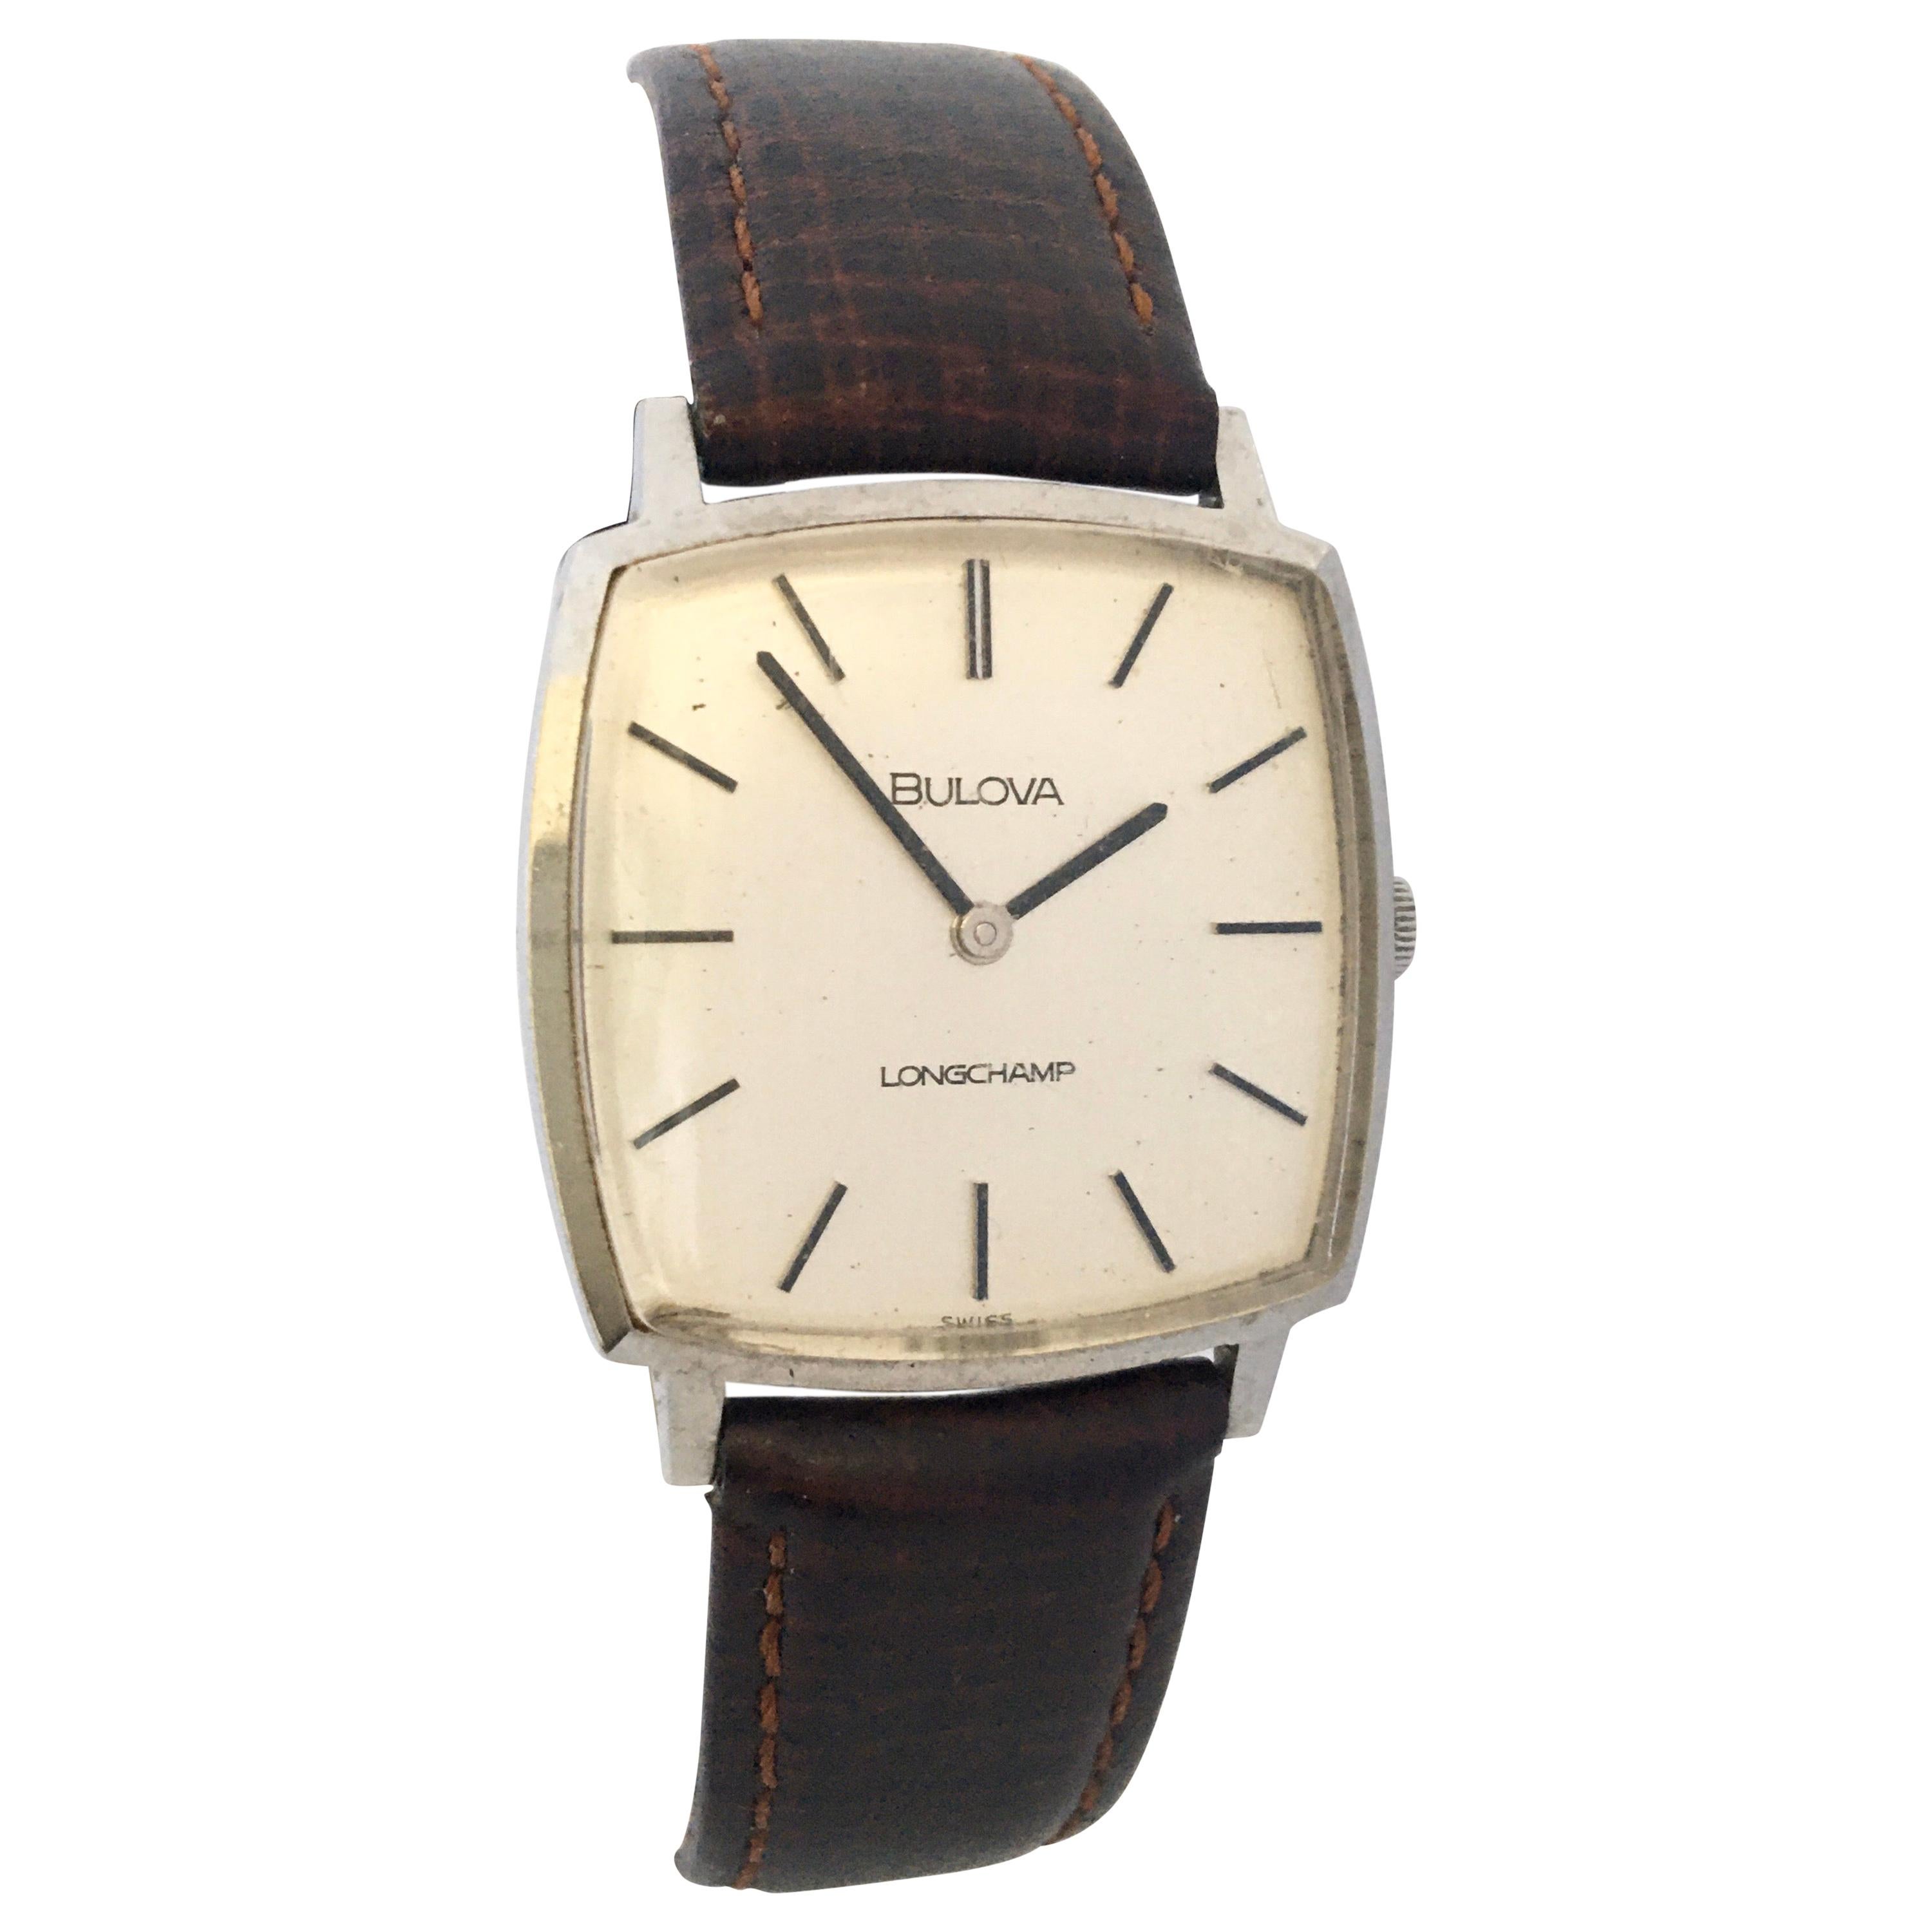 Vintage 1960s Stainless Steel Bulova Longchamp Slim Mechanical Watch